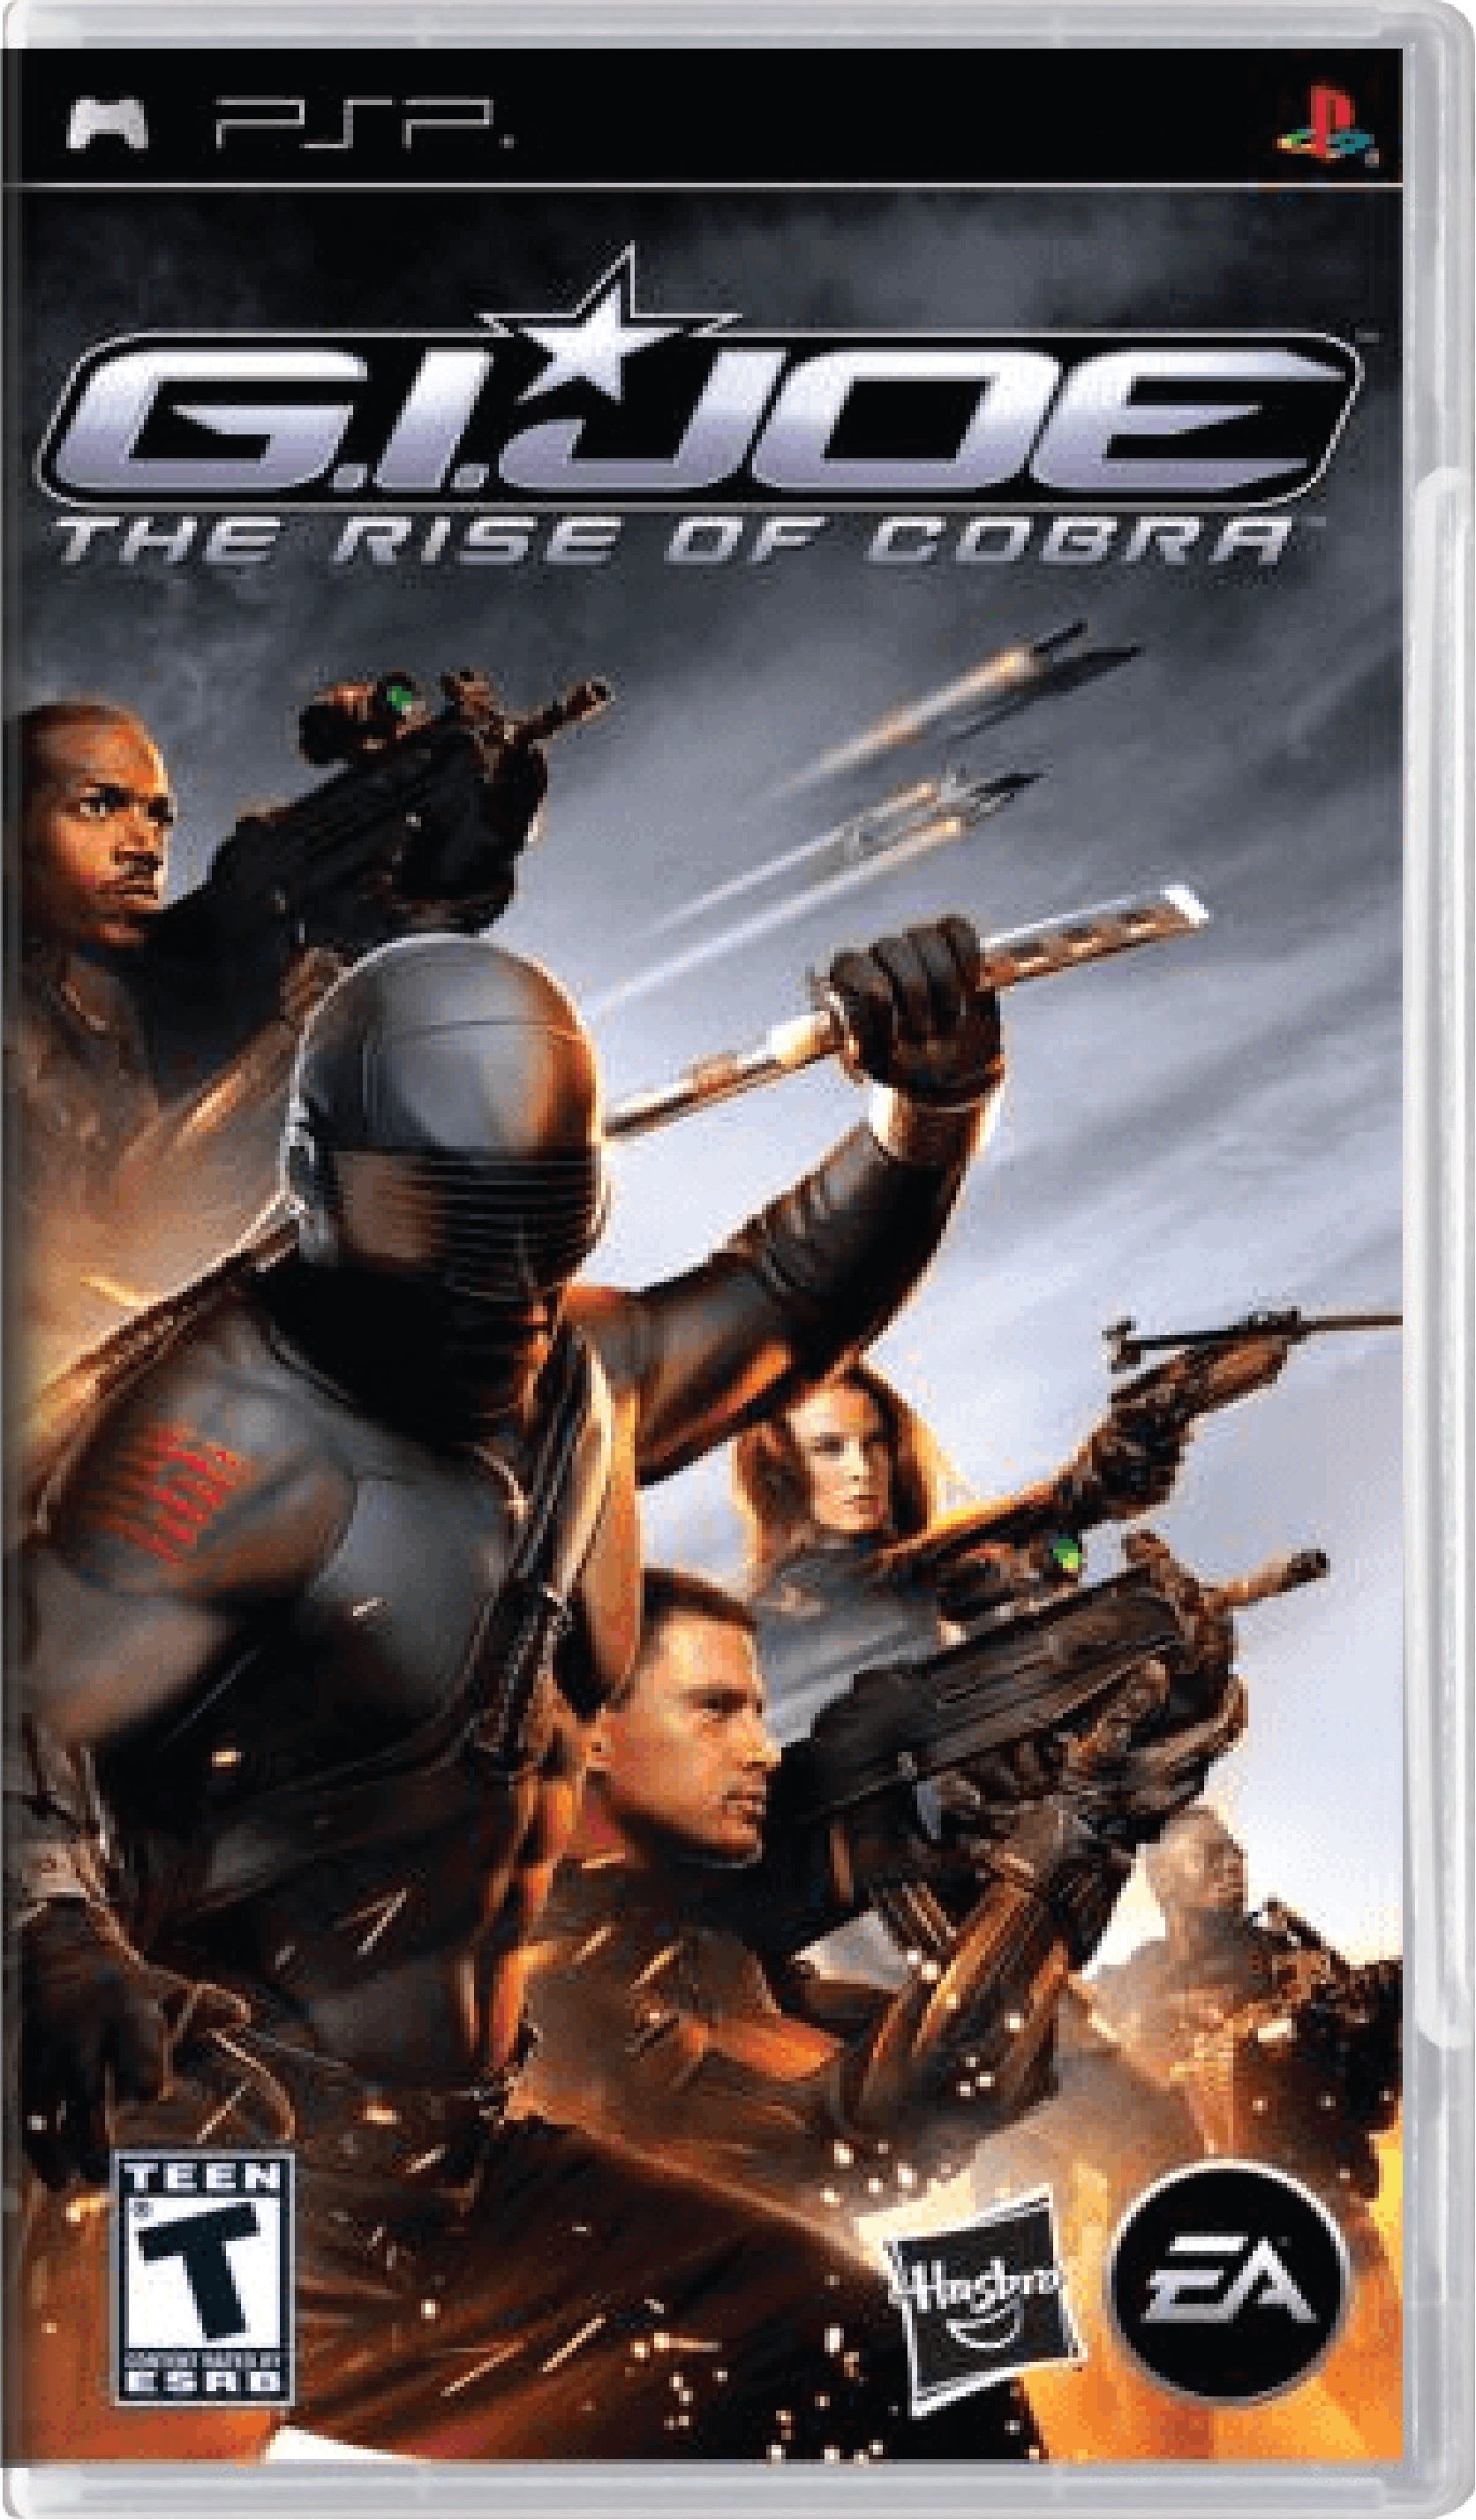 G.I. Joe The Rise of Cobra Cover Art